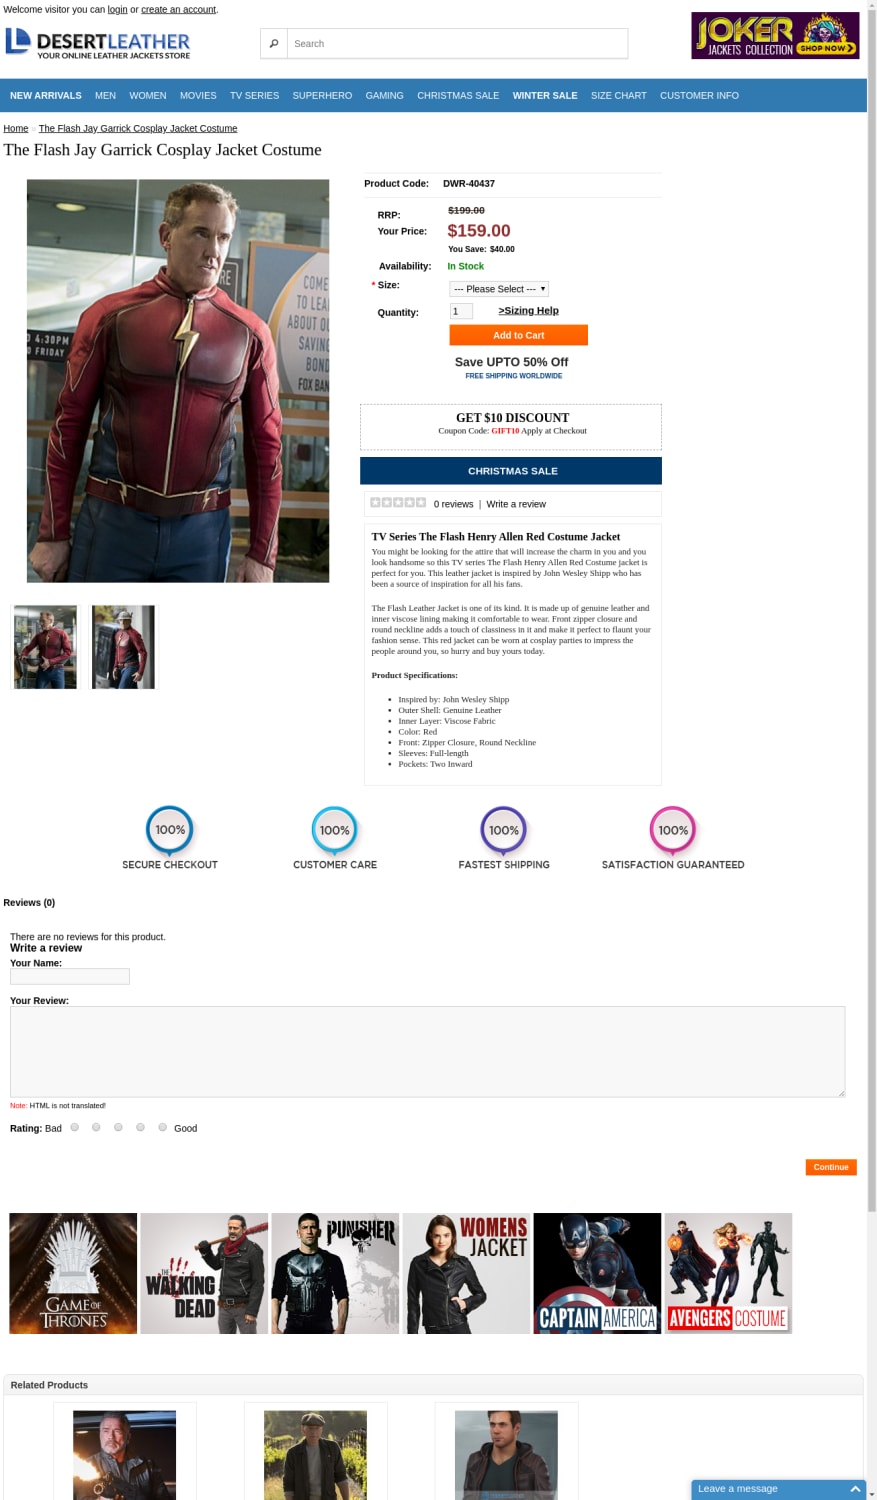 The Flash Jay Garrick Cosplay Jacket Costume